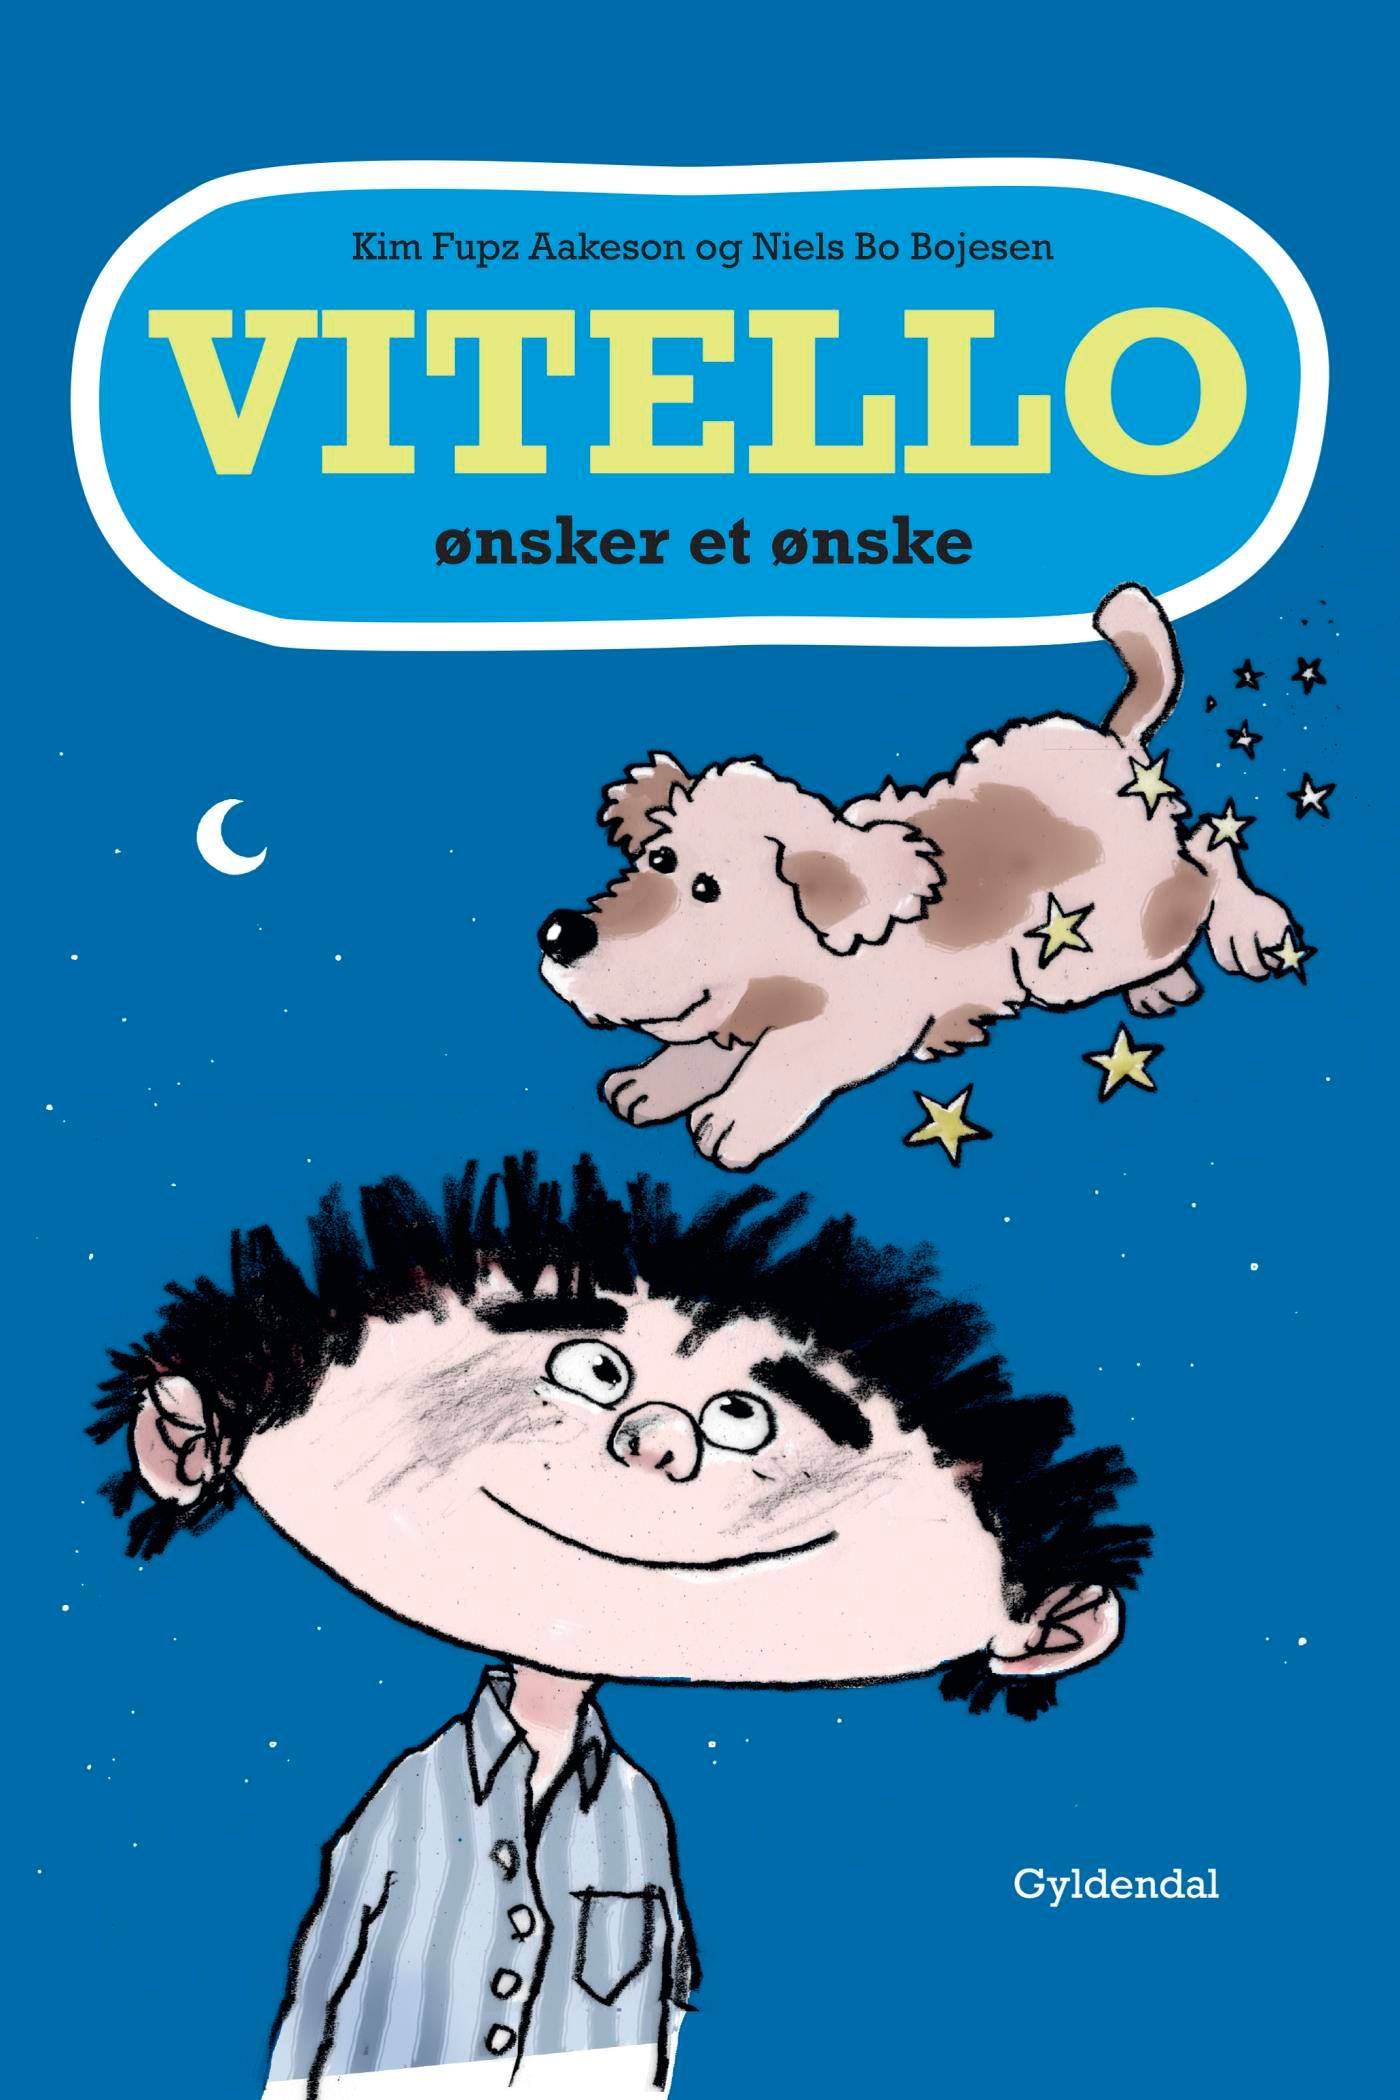 Vitello ønsker et ønske - Lyt&læs, eBook by Niels Bo Bojesen, Kim Fupz Aakeson